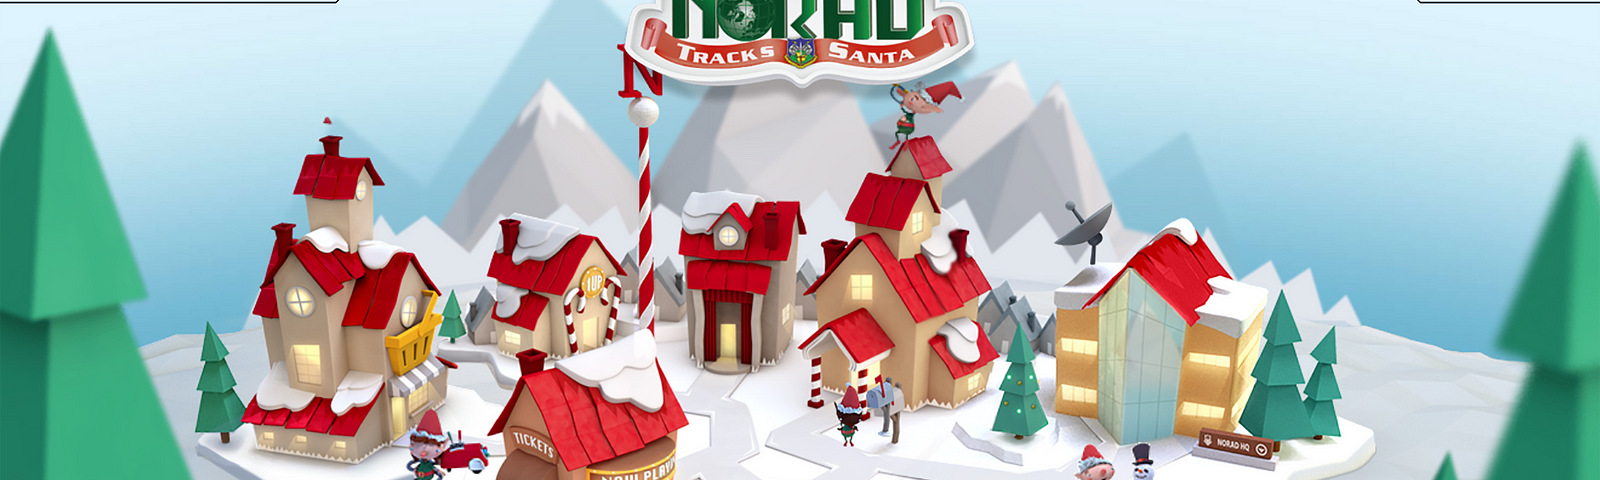 NORAD’s Track Santa website image